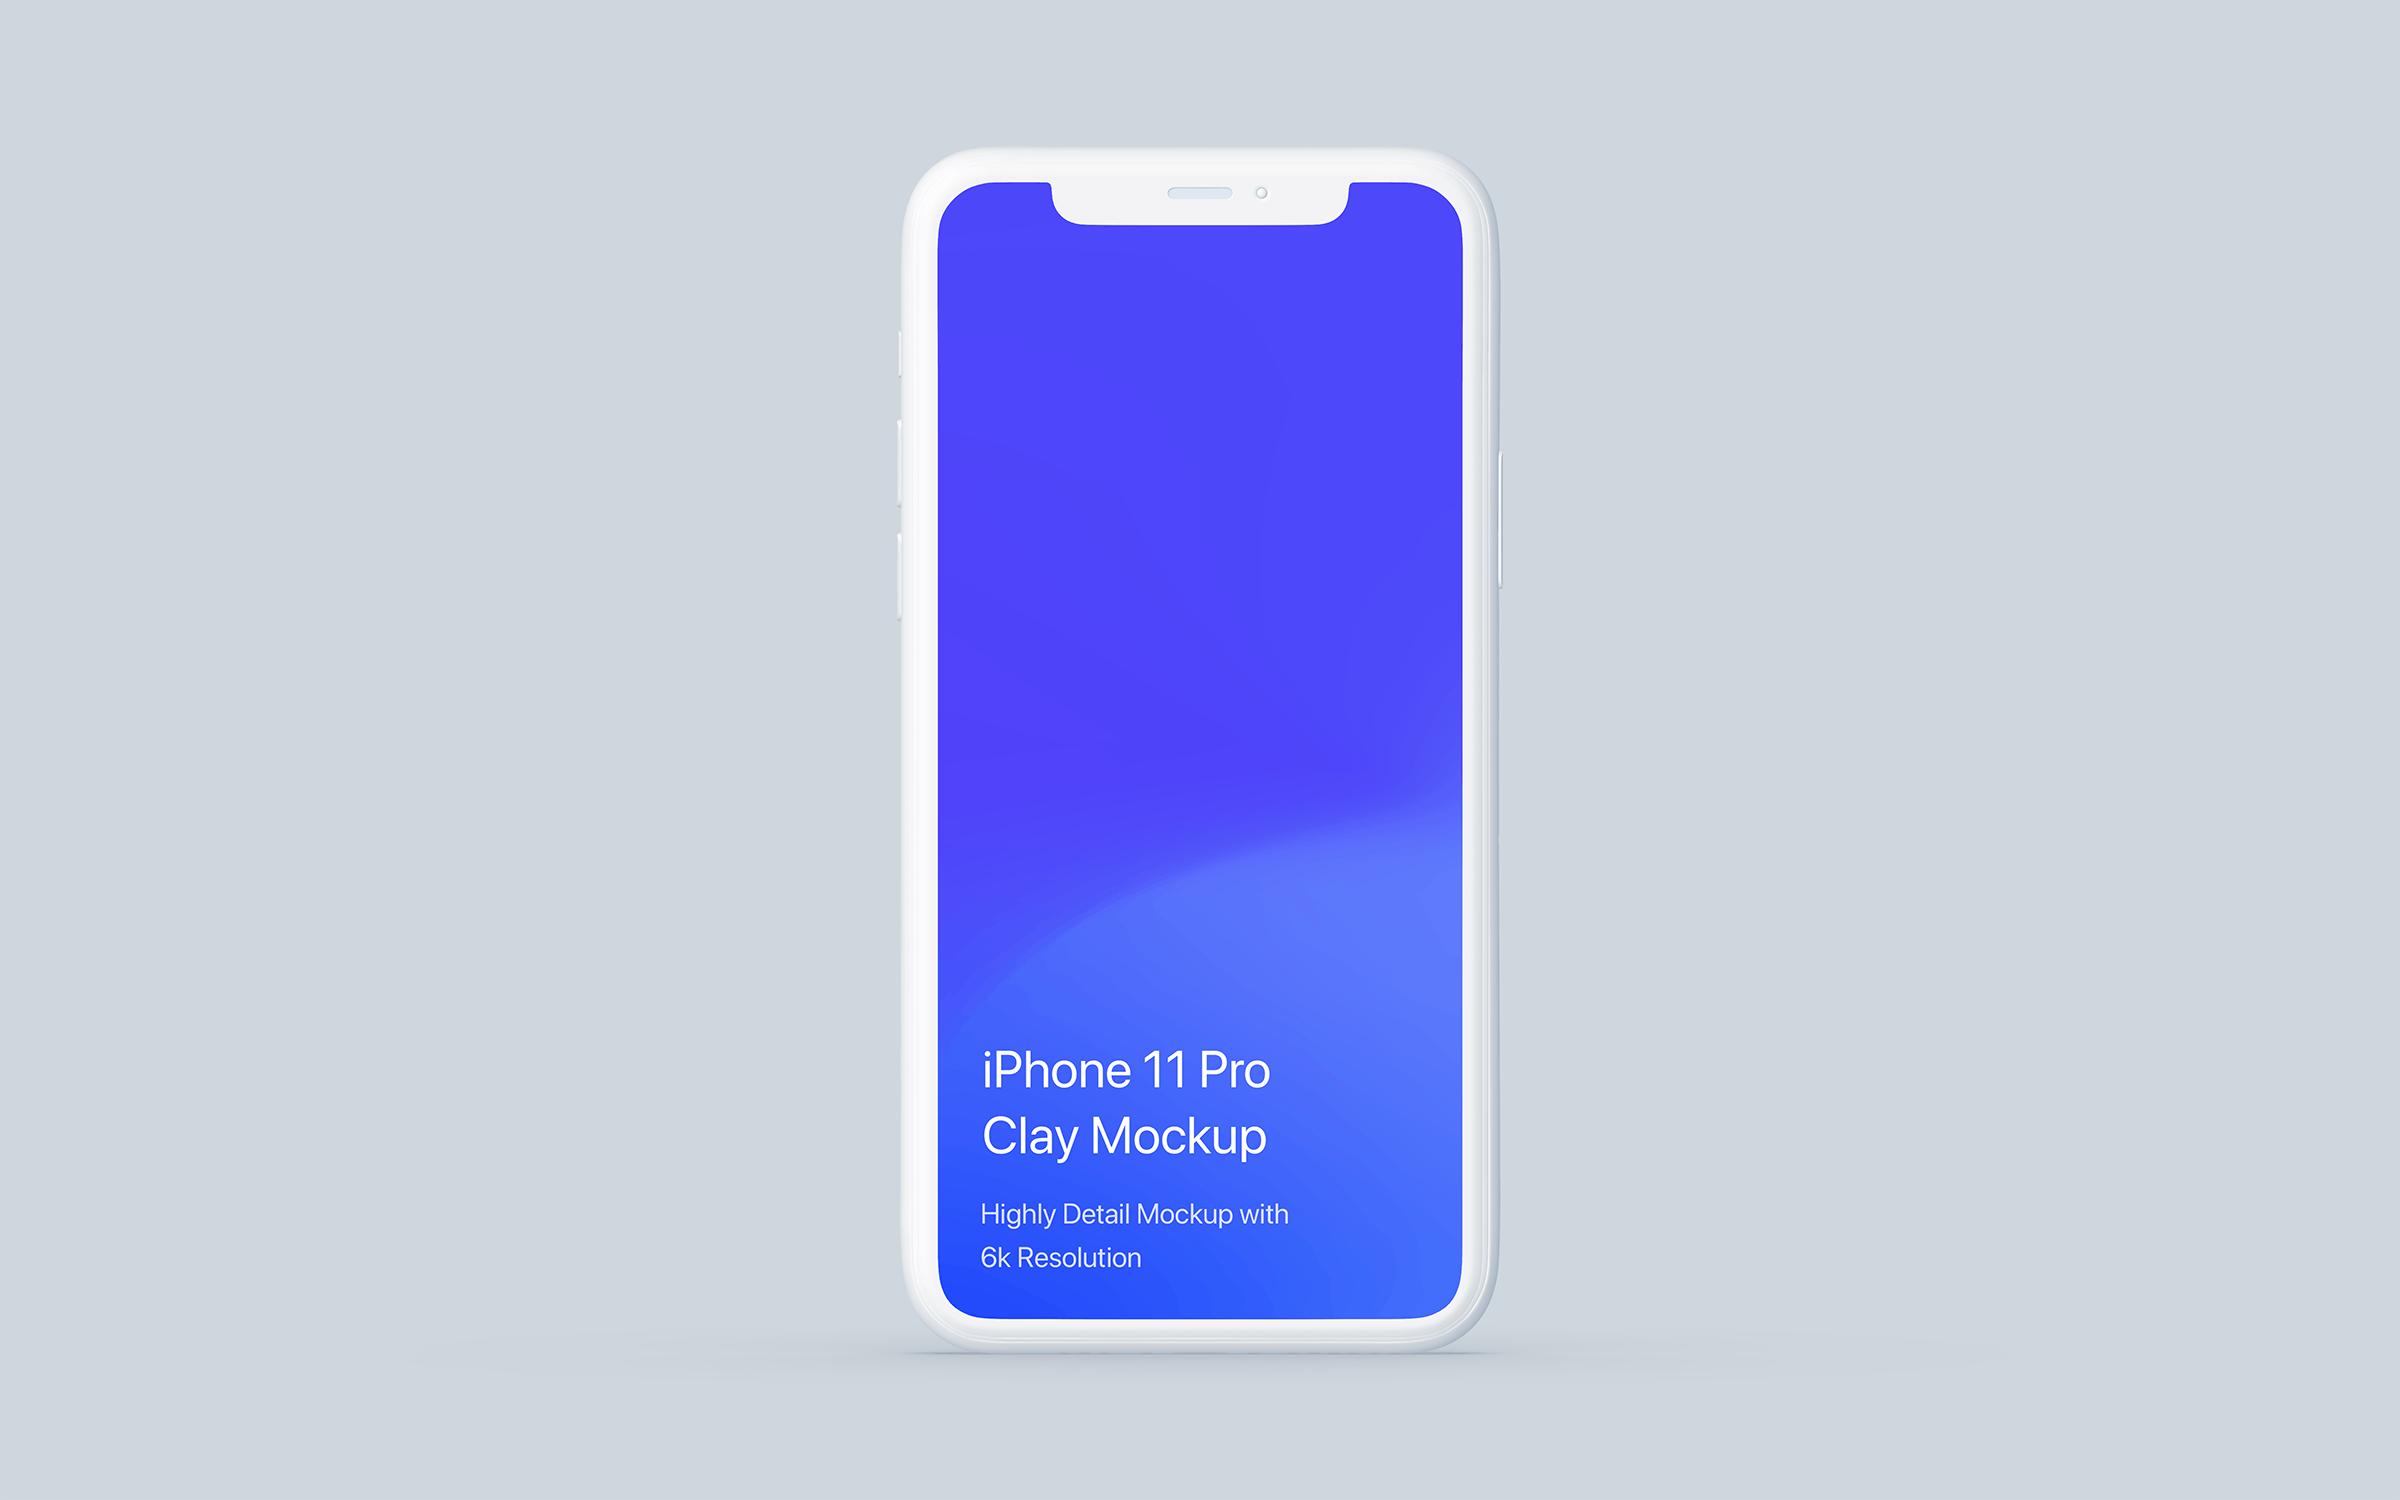 黏土陶瓷风格iPhone 11 Pro手机非凡图库精选样机模板 iPhone 11 Pro Mockup – Clay Mockup Pack插图(4)